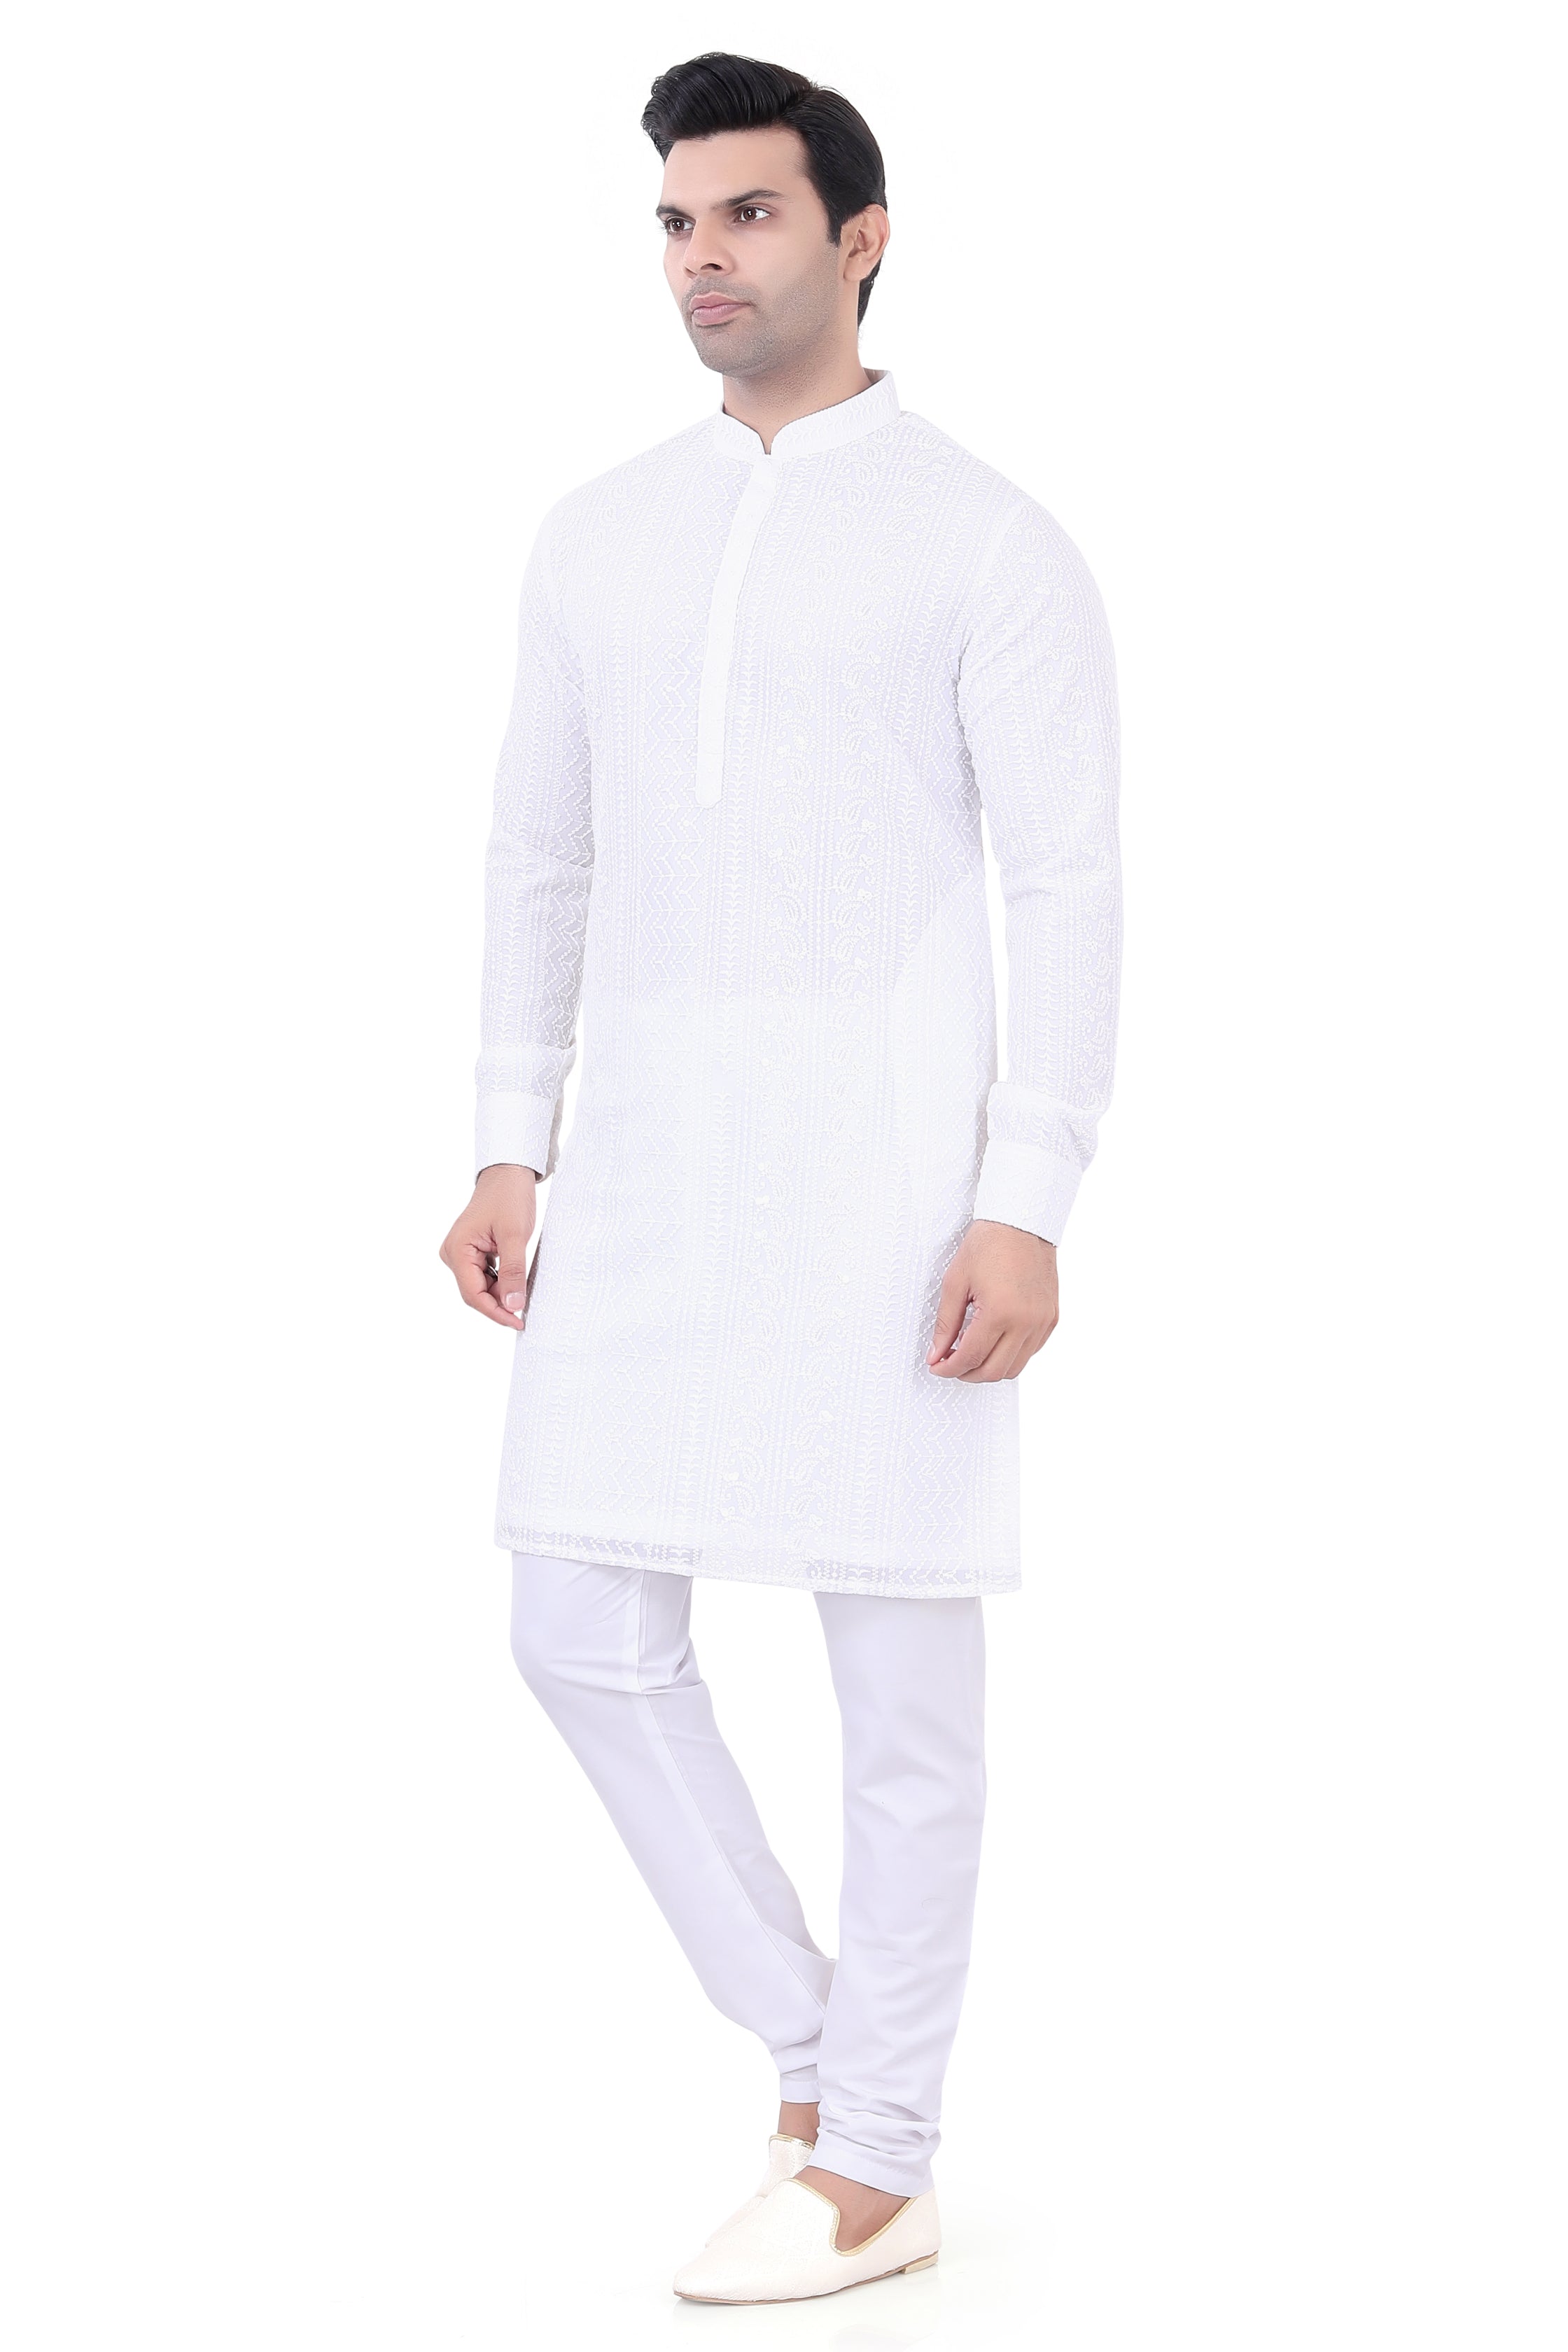 Lucknowi  Kurta Pajama Set in White - LCKP-009